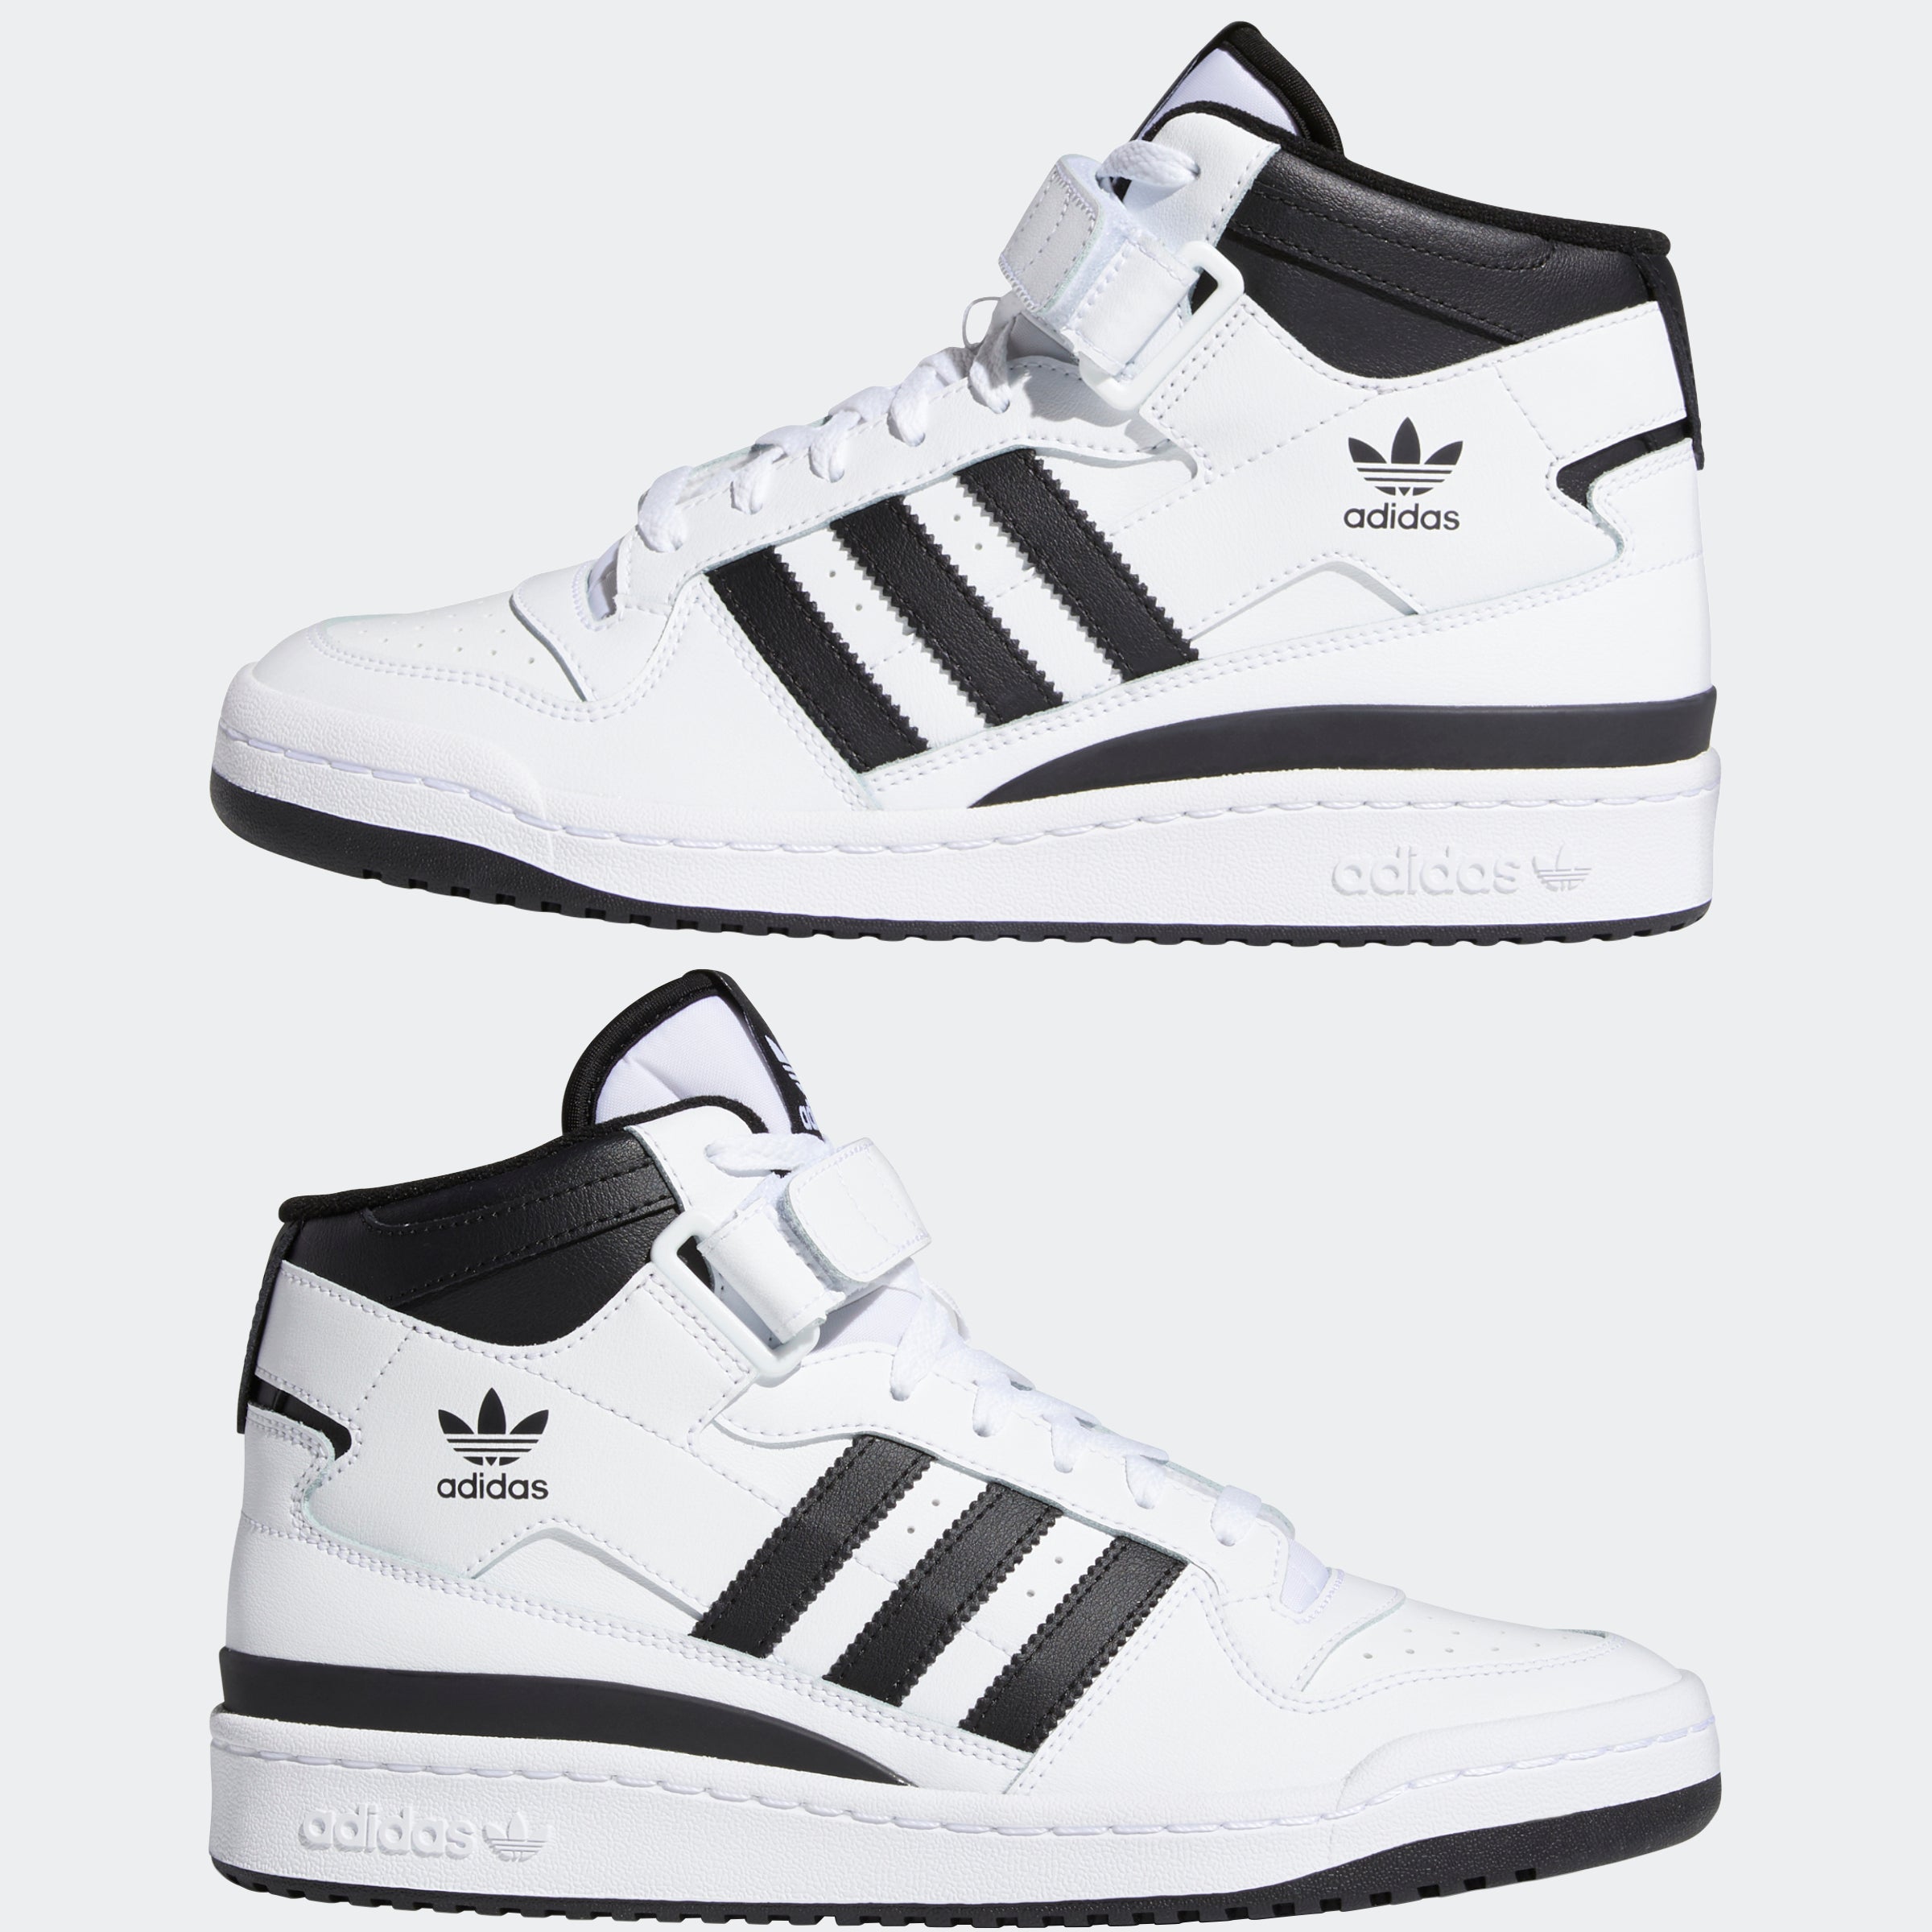 Adidas Originals - Baskets Forum Mid FY7939 Footwear White Core Black 